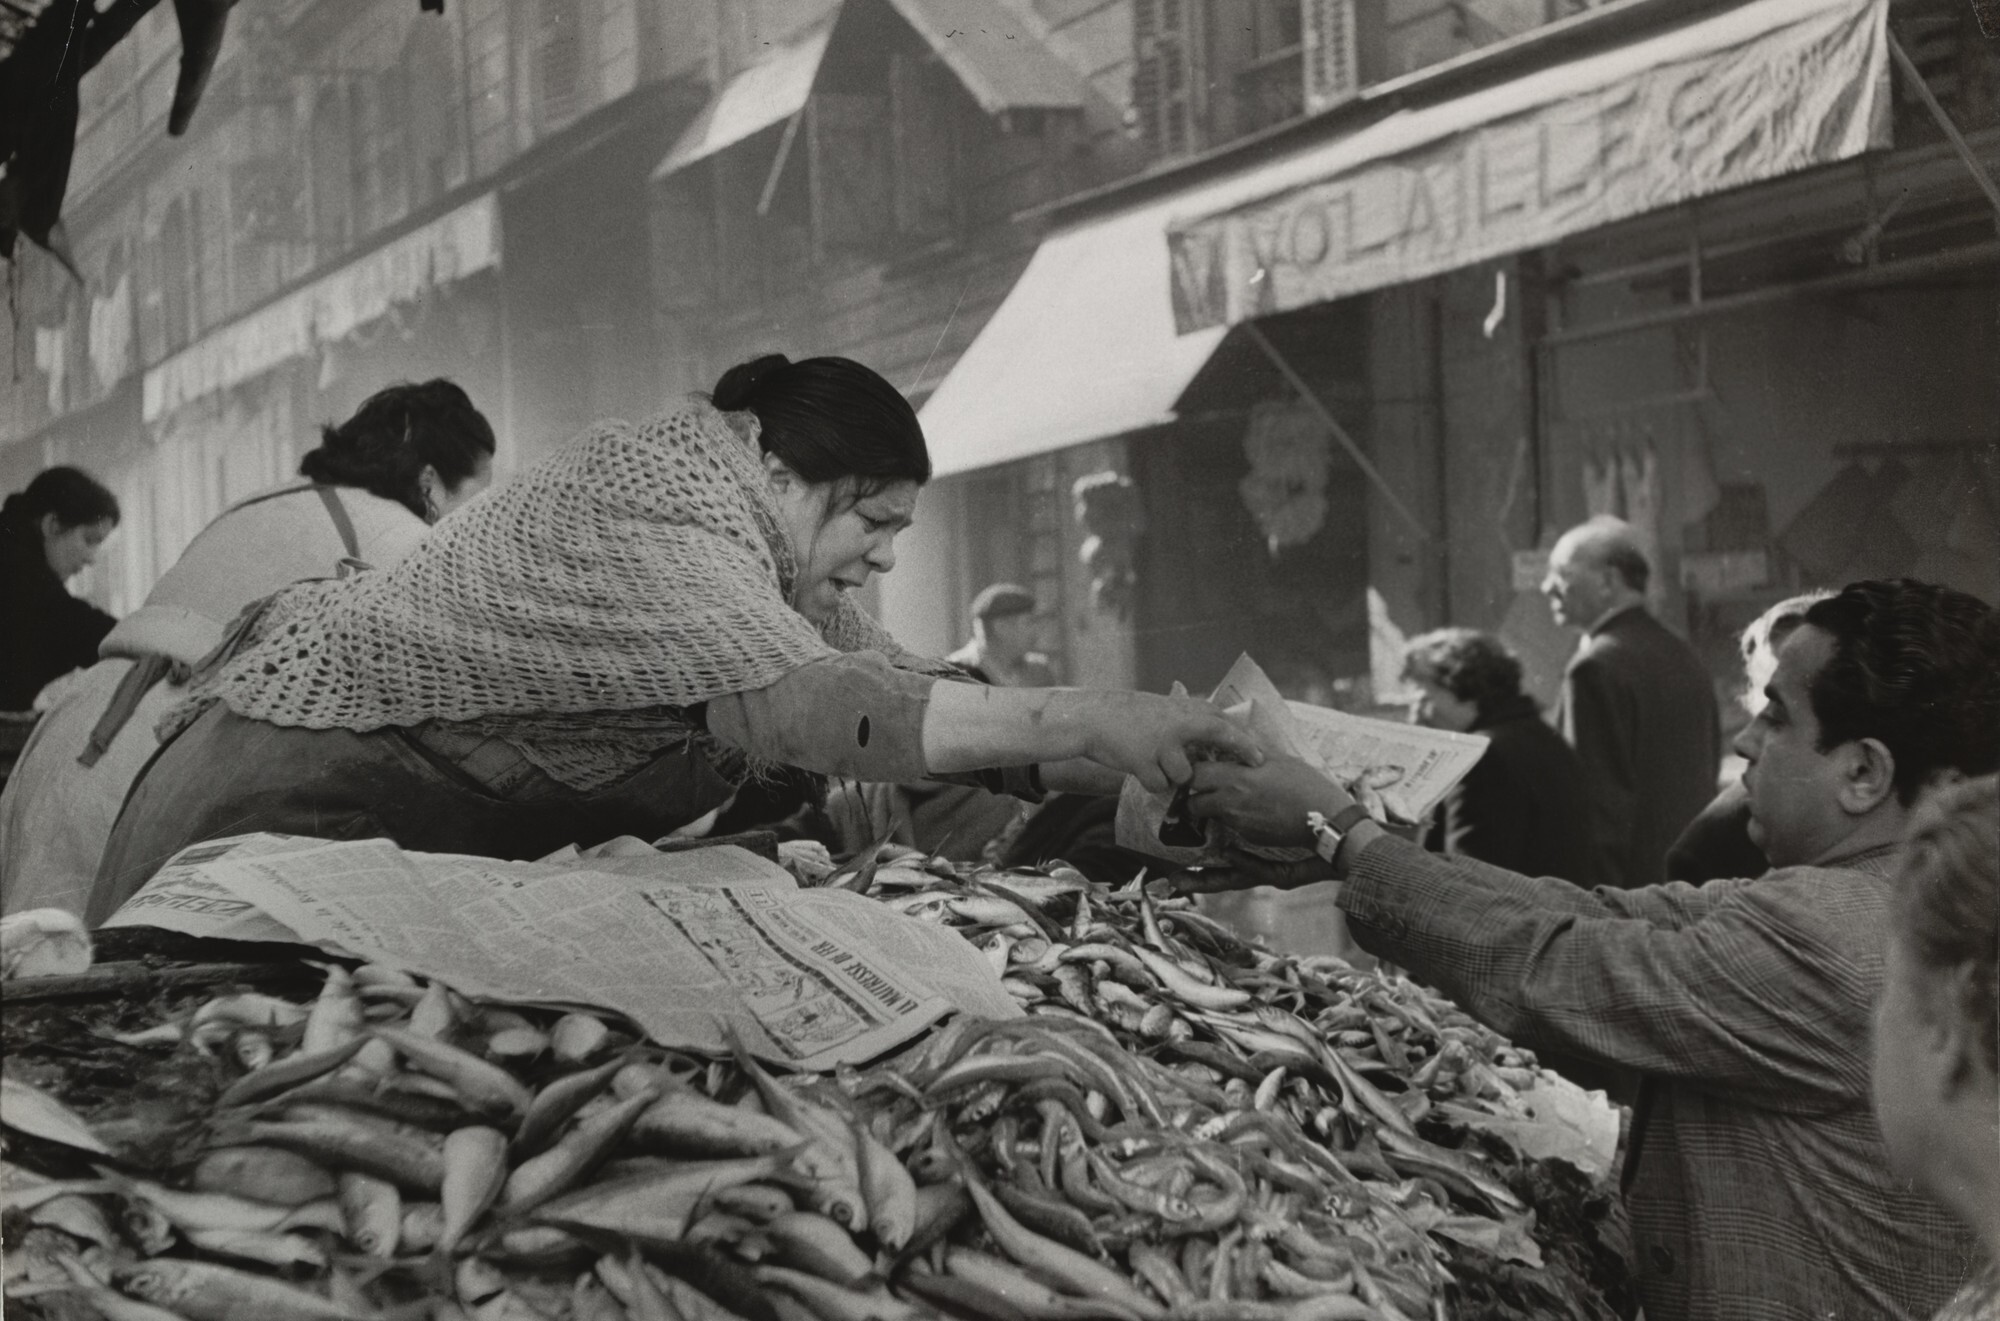 Рынок в Марселе, 1954. Фотограф Анри Картье-Брессон